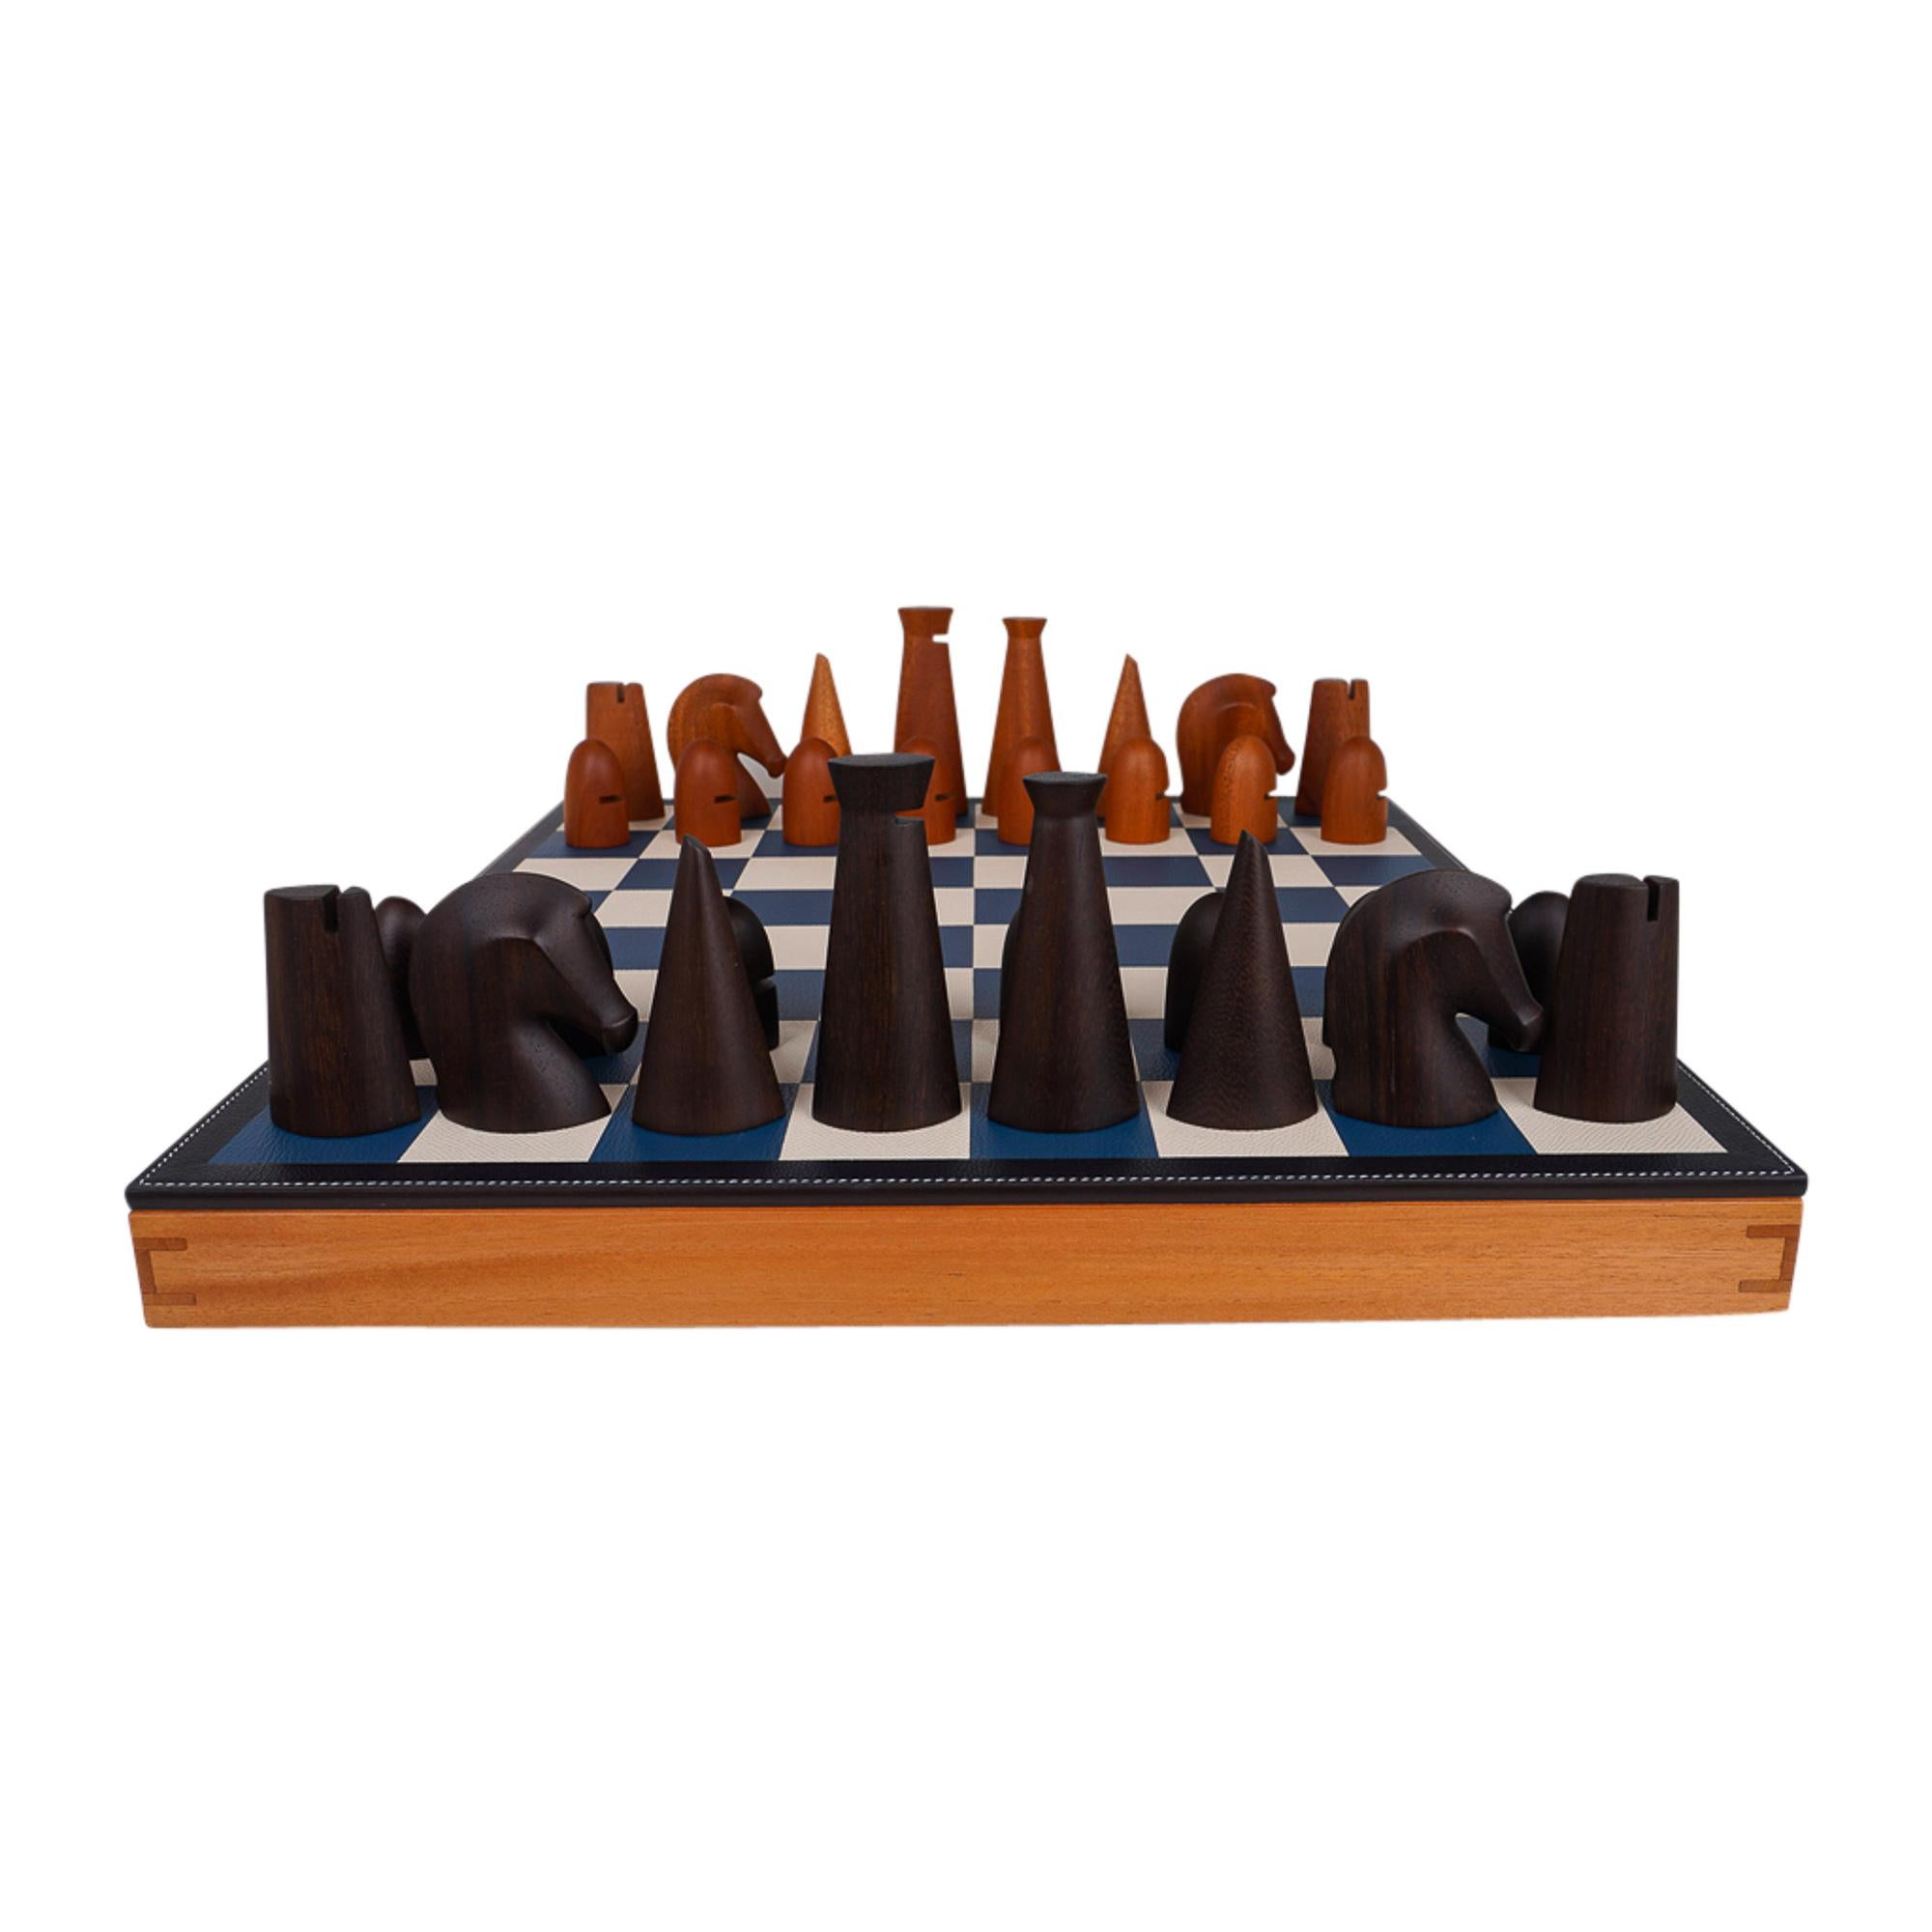 Hermes Samarcande Chess Set Sycamore Mahogany Crocodile Handles New w/ Box For Sale 2